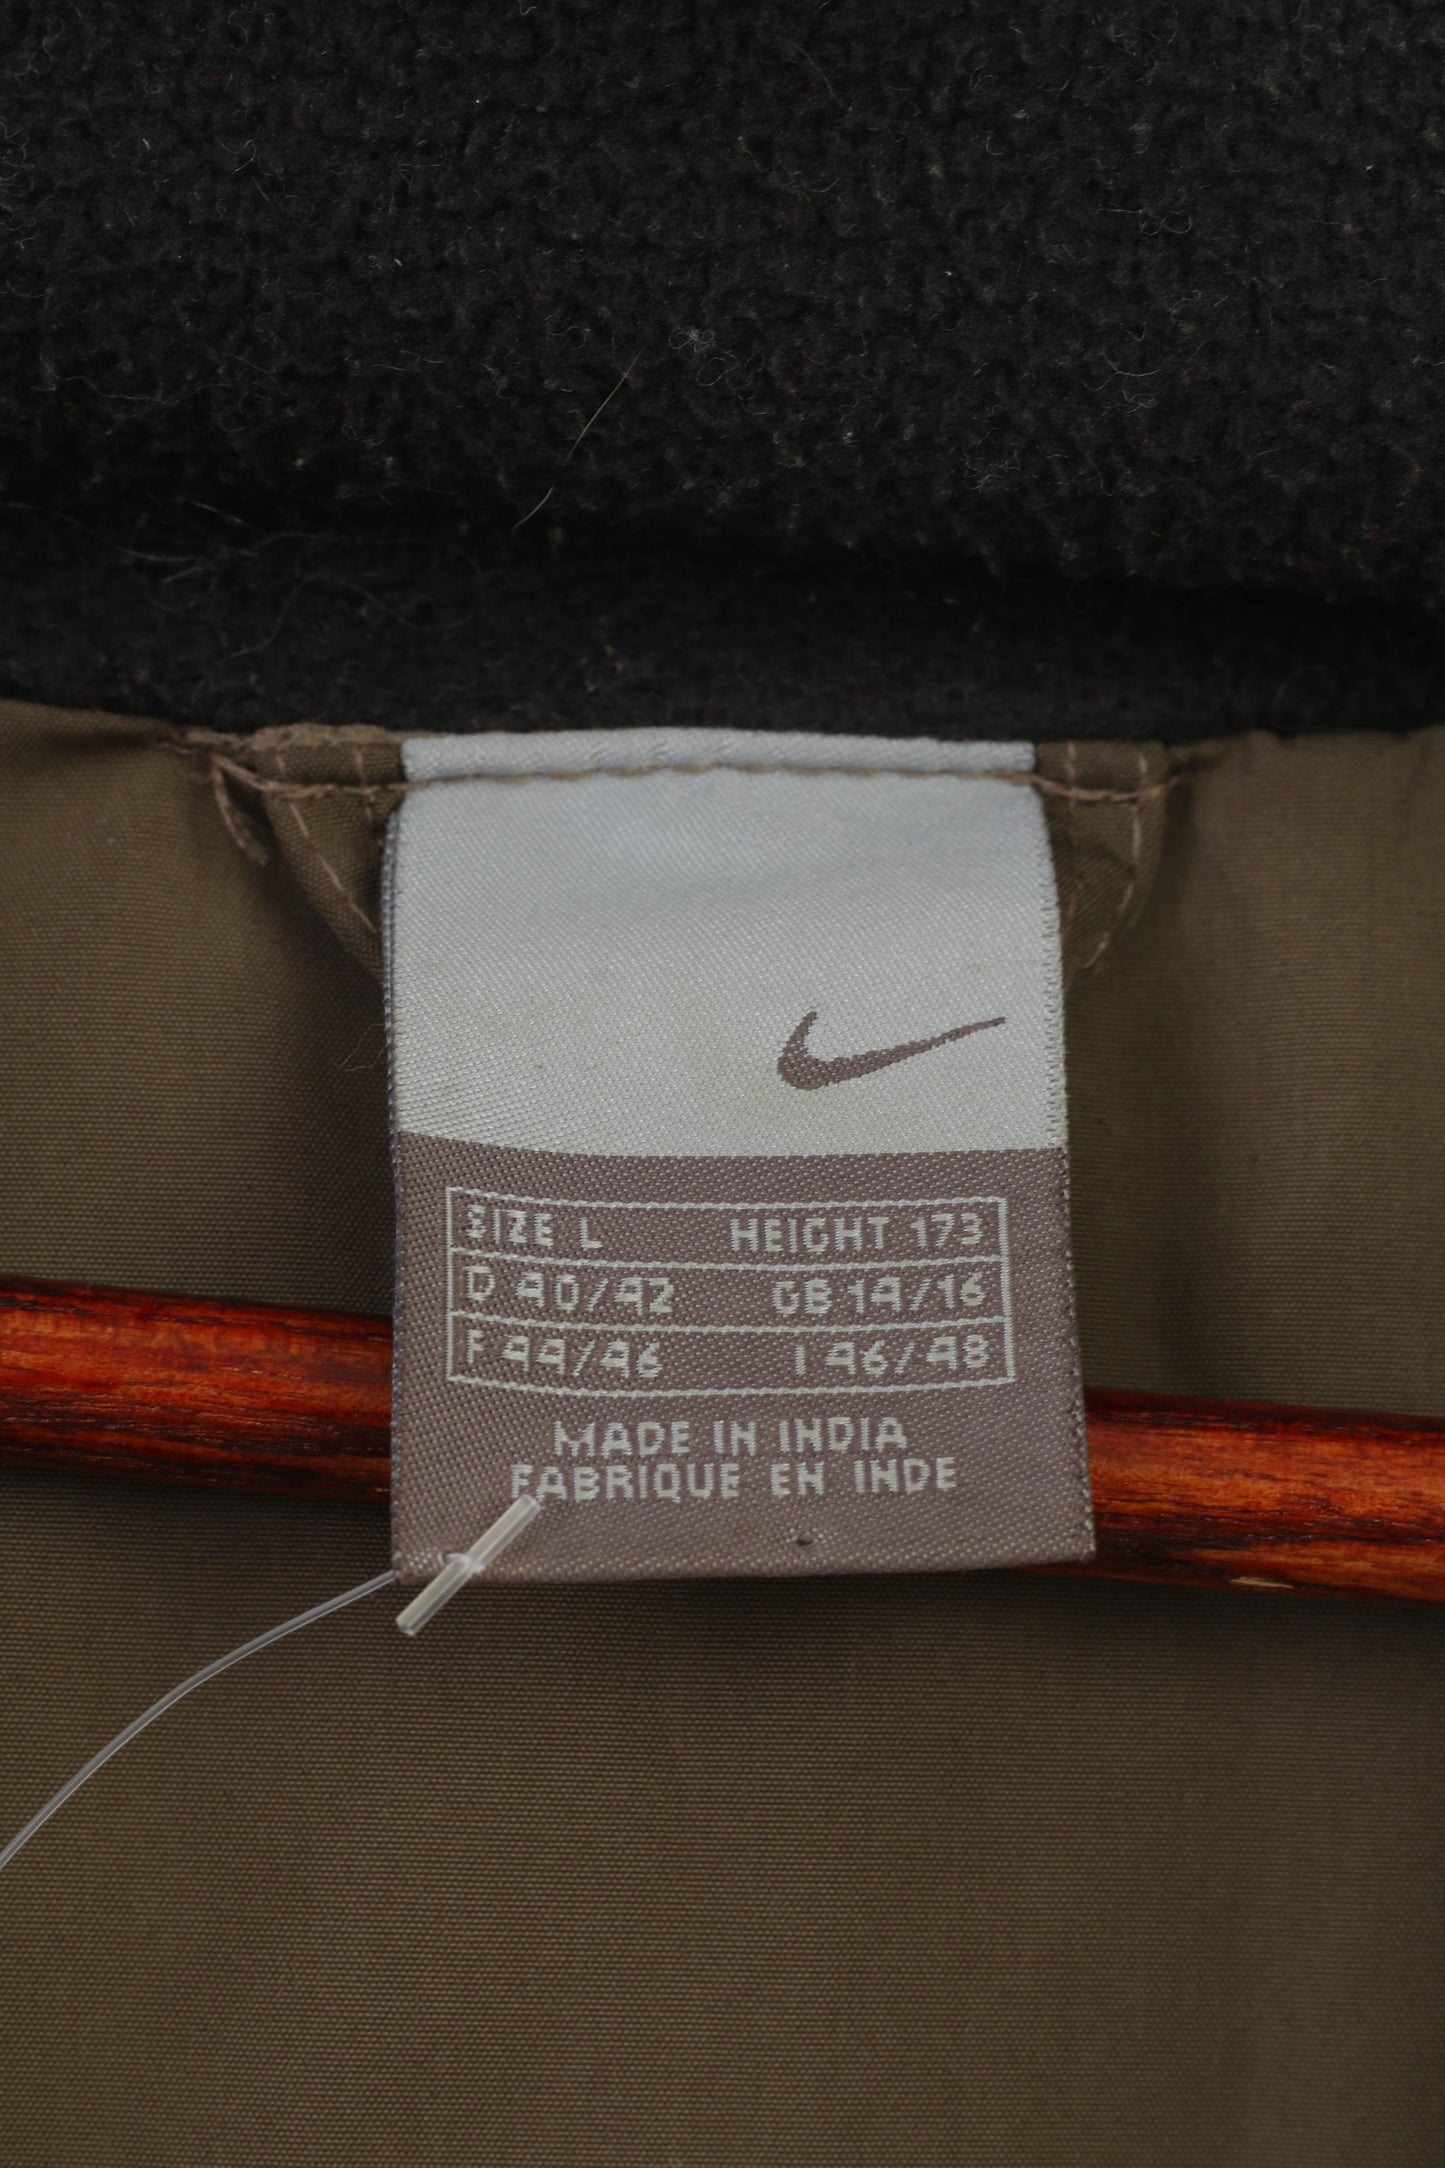 Nike Woman L Jacket Khaki Ful Zipper Hood Padded Pockets Vintage Top